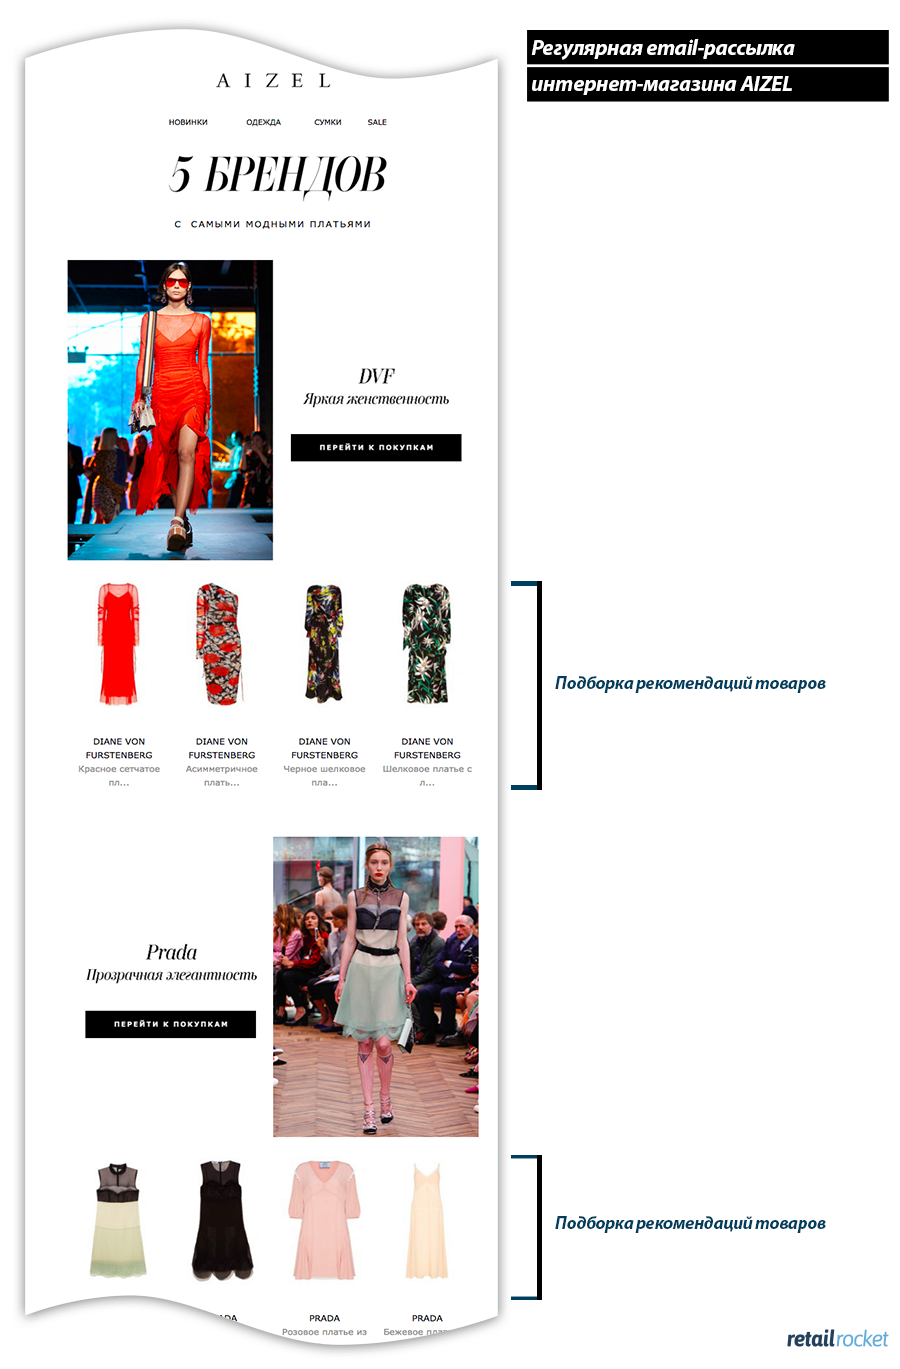 Секреты email-маркетинга для fashion-ритейла